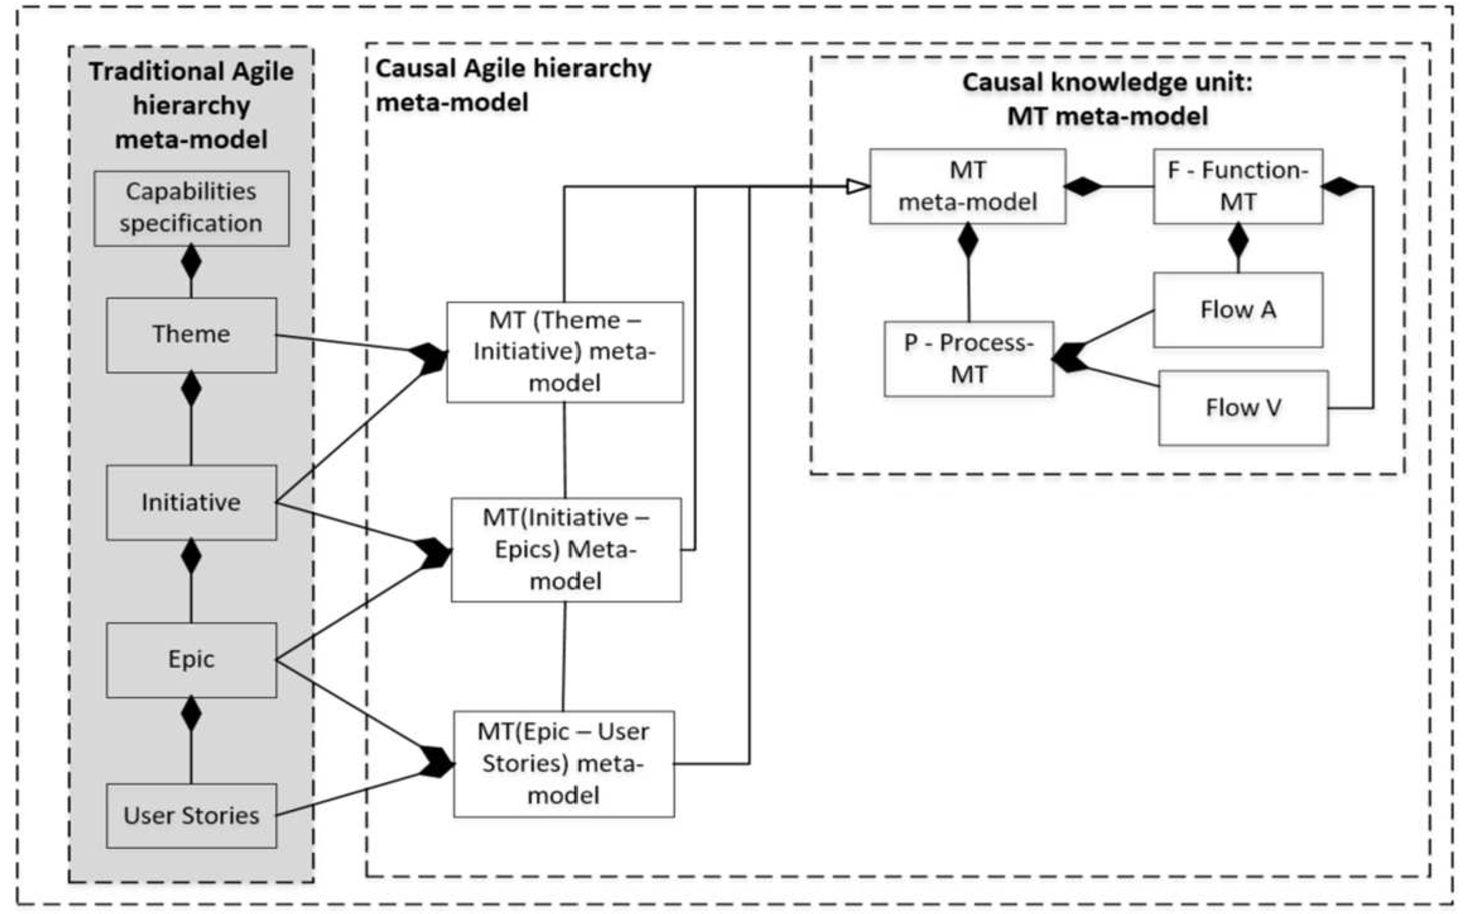 Conceptual model of causal knowledge repository (UML Class diagram).